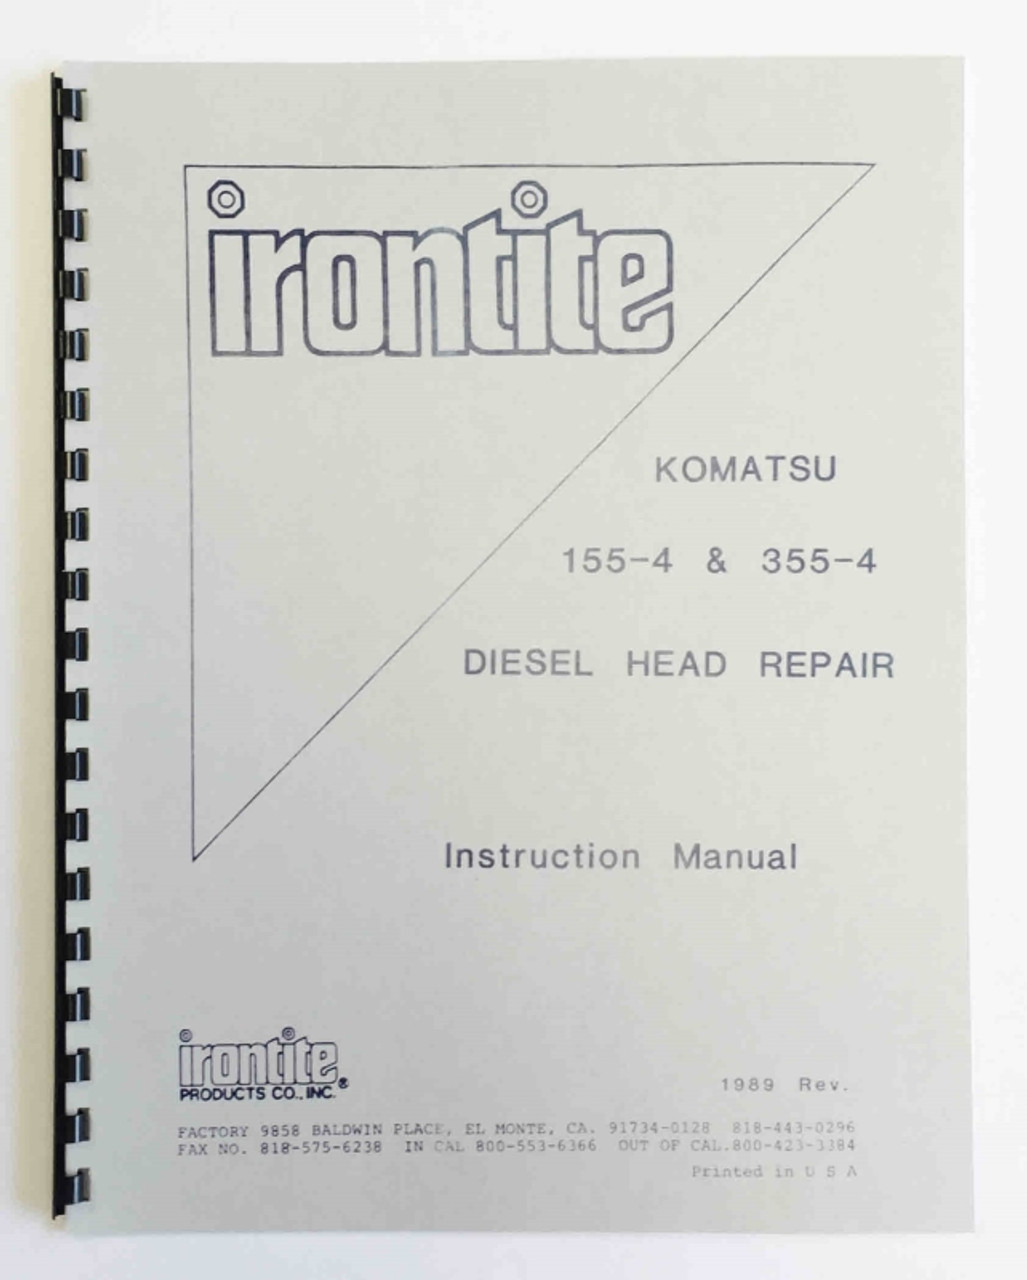 Irontite Komatsu Diesel Repair Manual